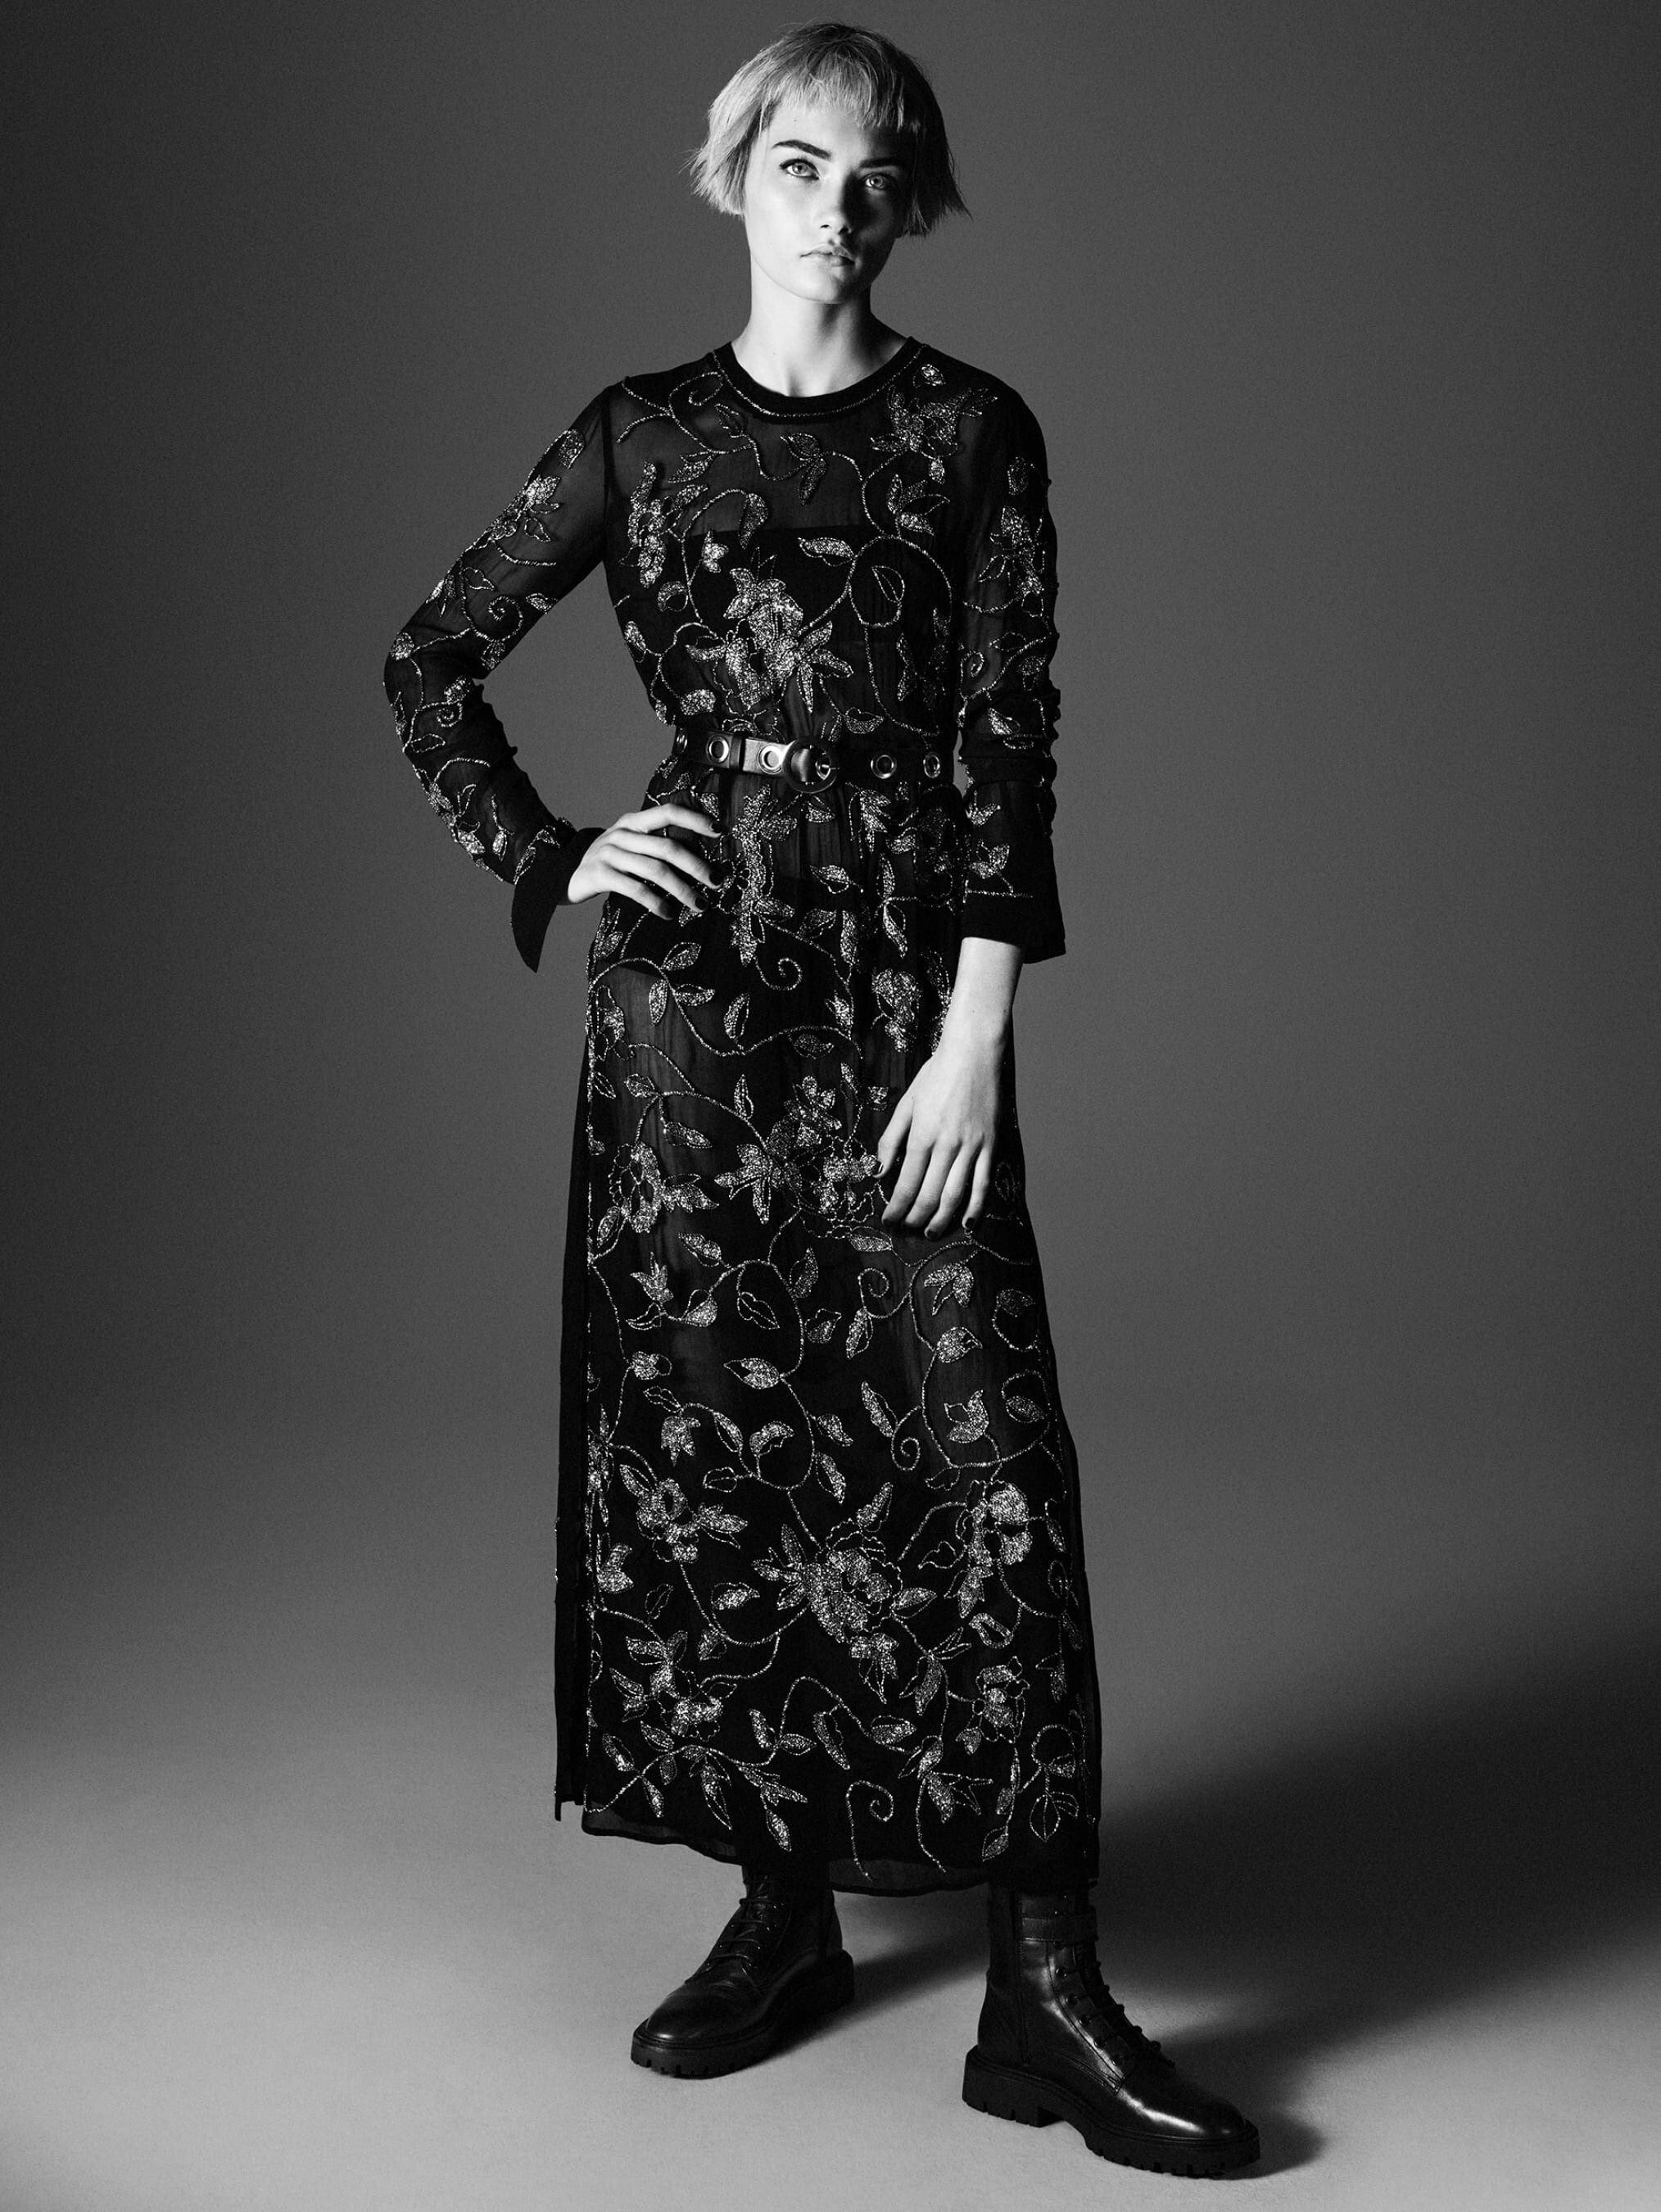 Modelo 5 de la colección 'Black Dress Collection' | Foto: David Sims para Zara